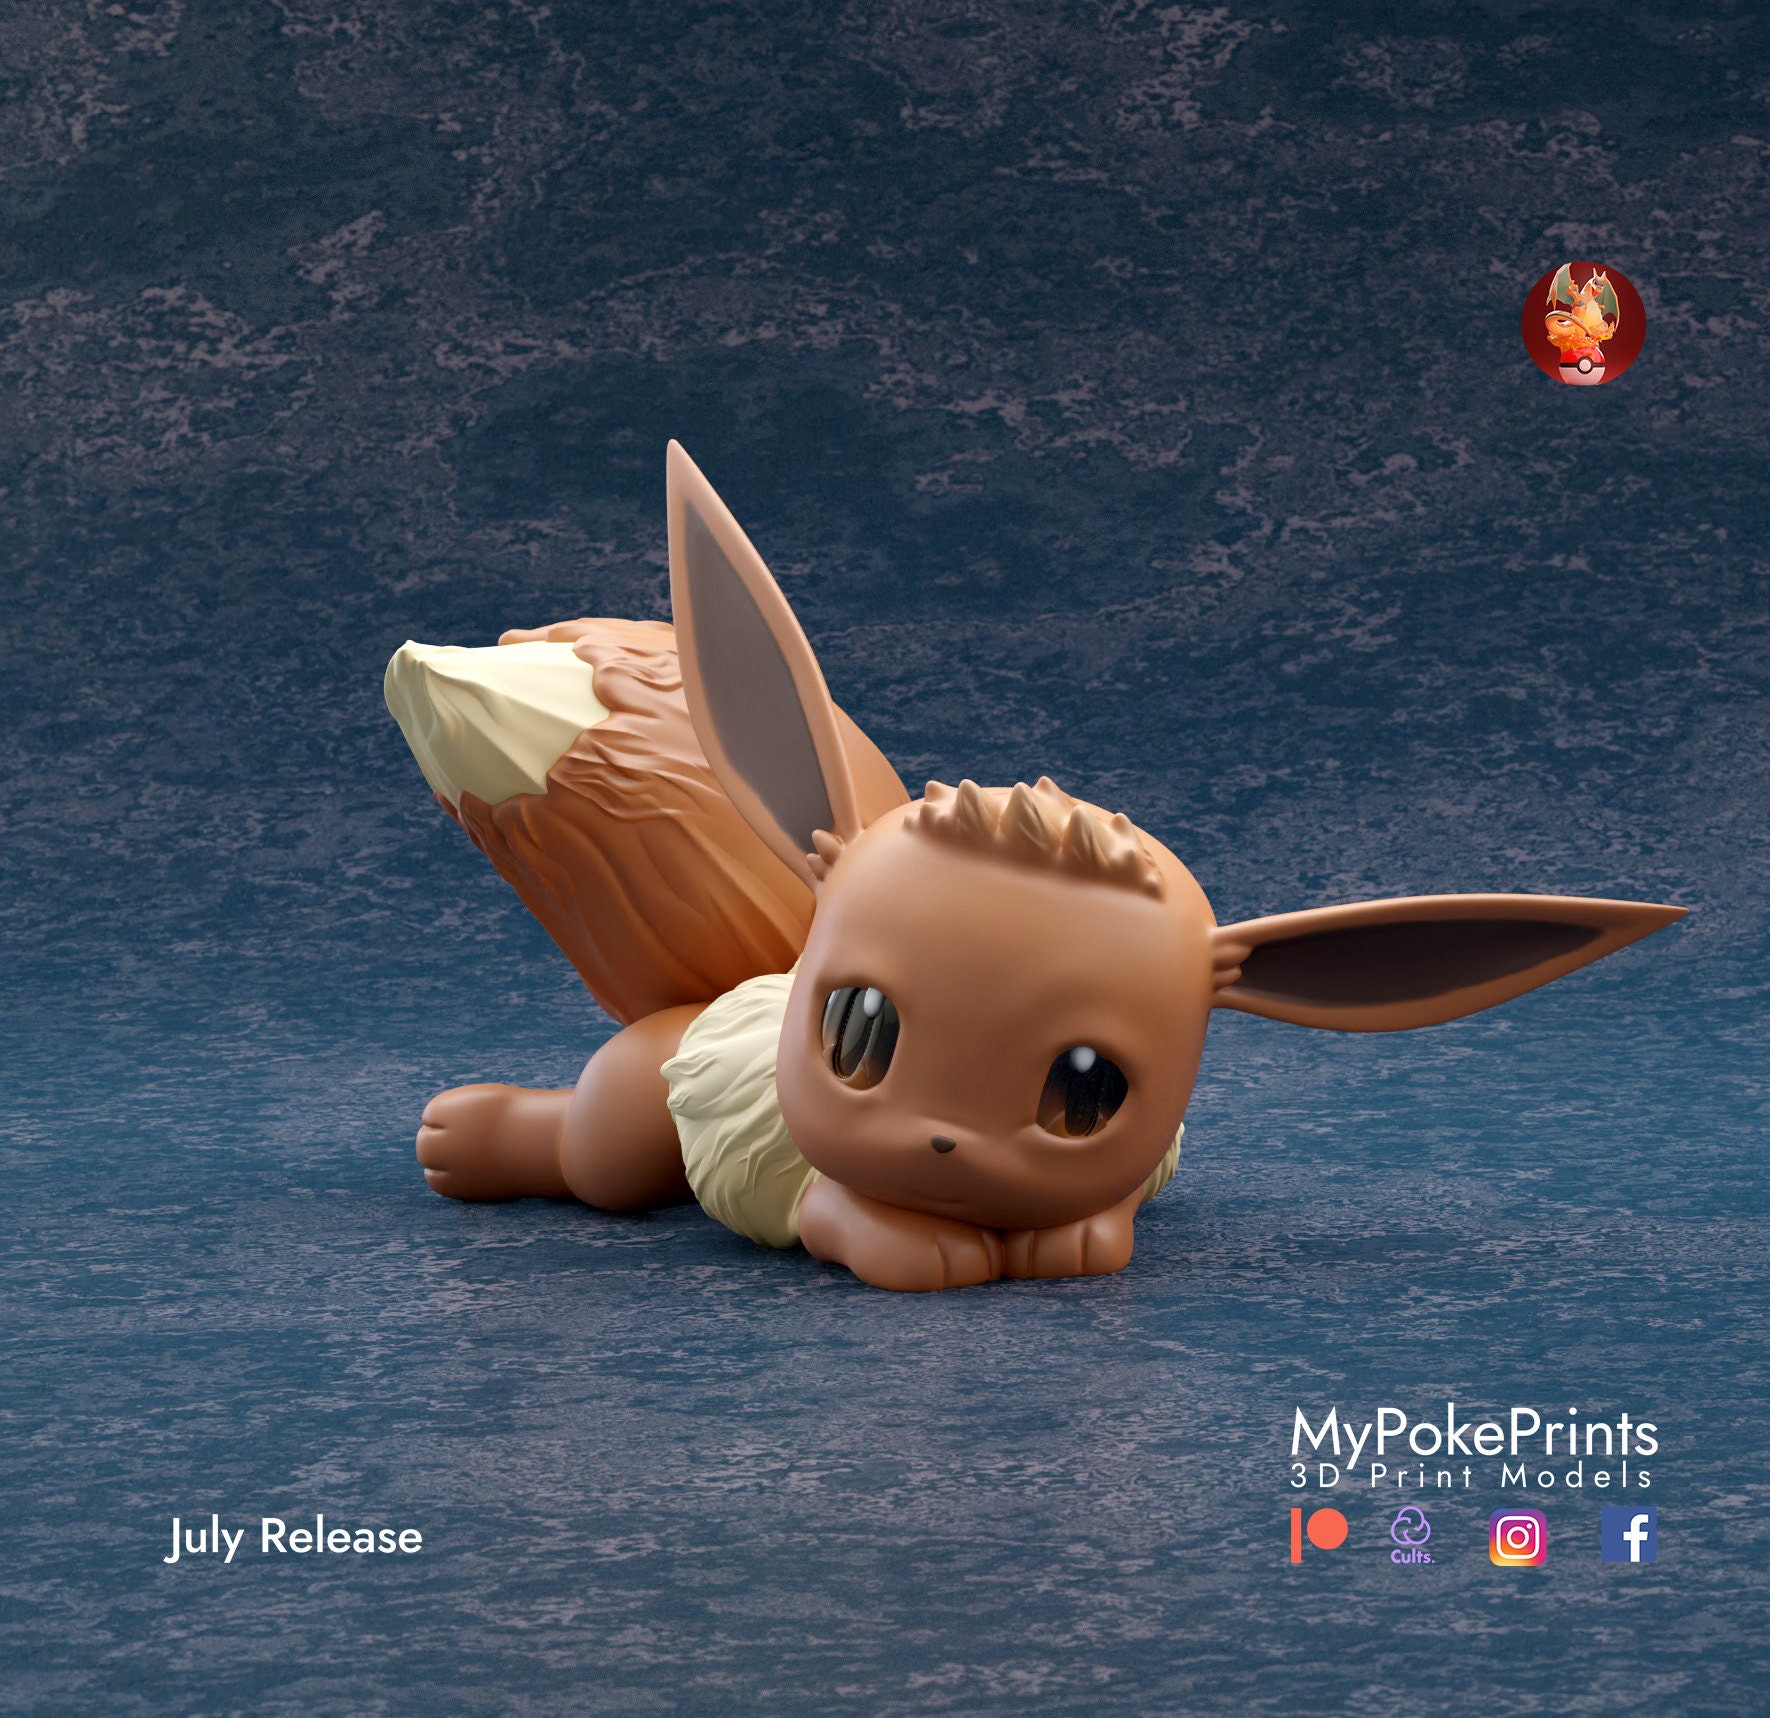 Eevee Pokemon Model/figurine unpainted 